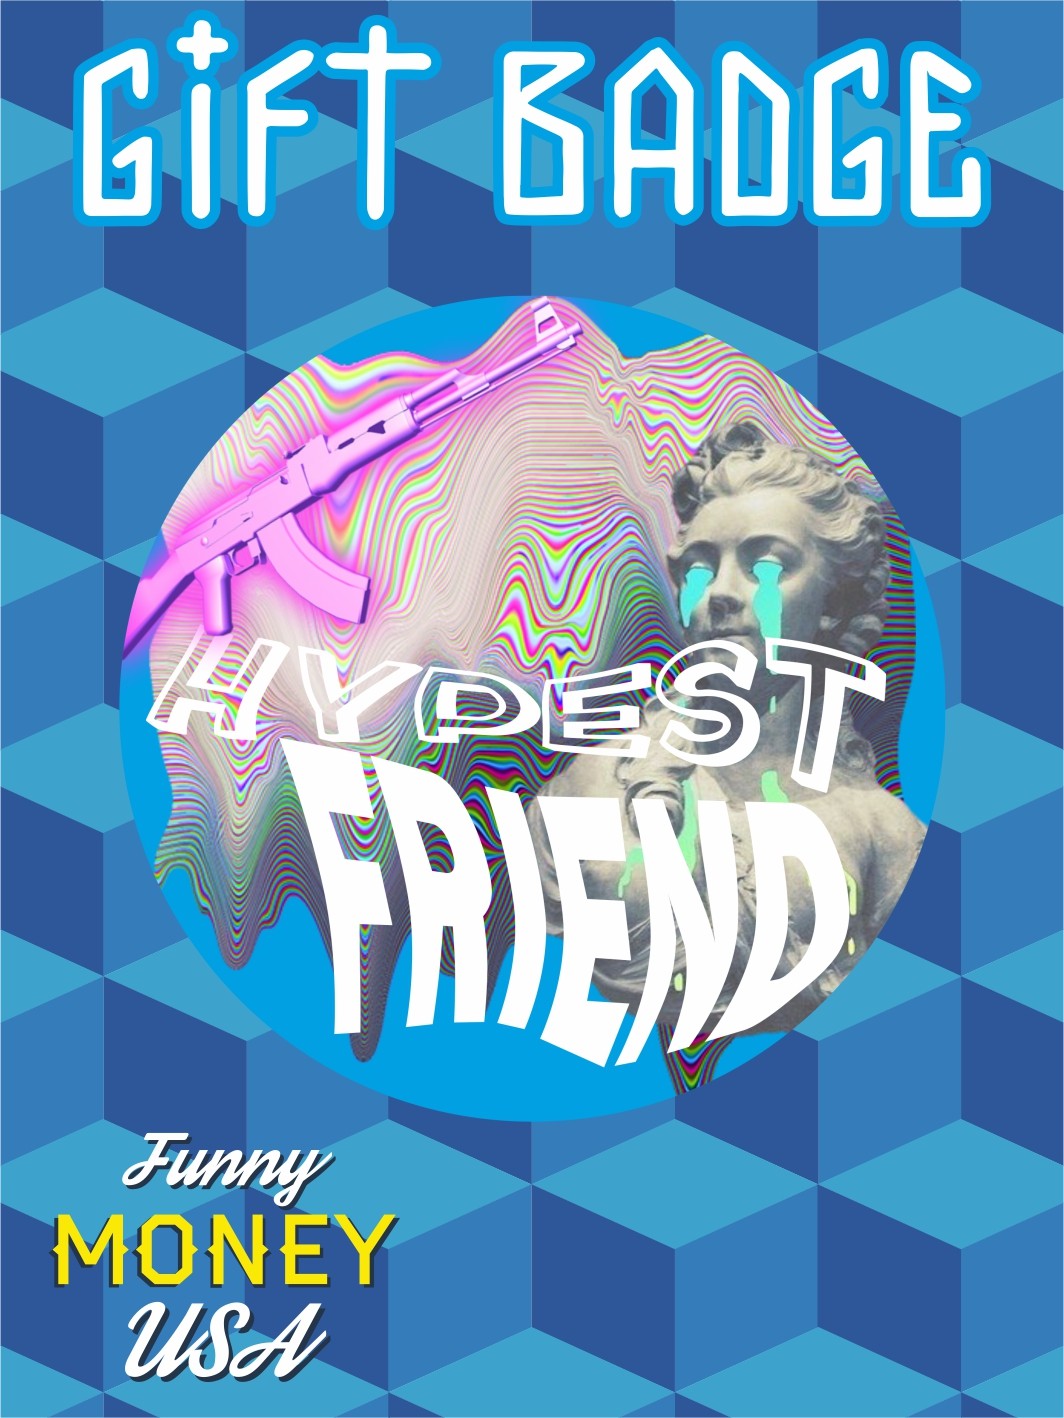 Gift badges "Hypest friend"